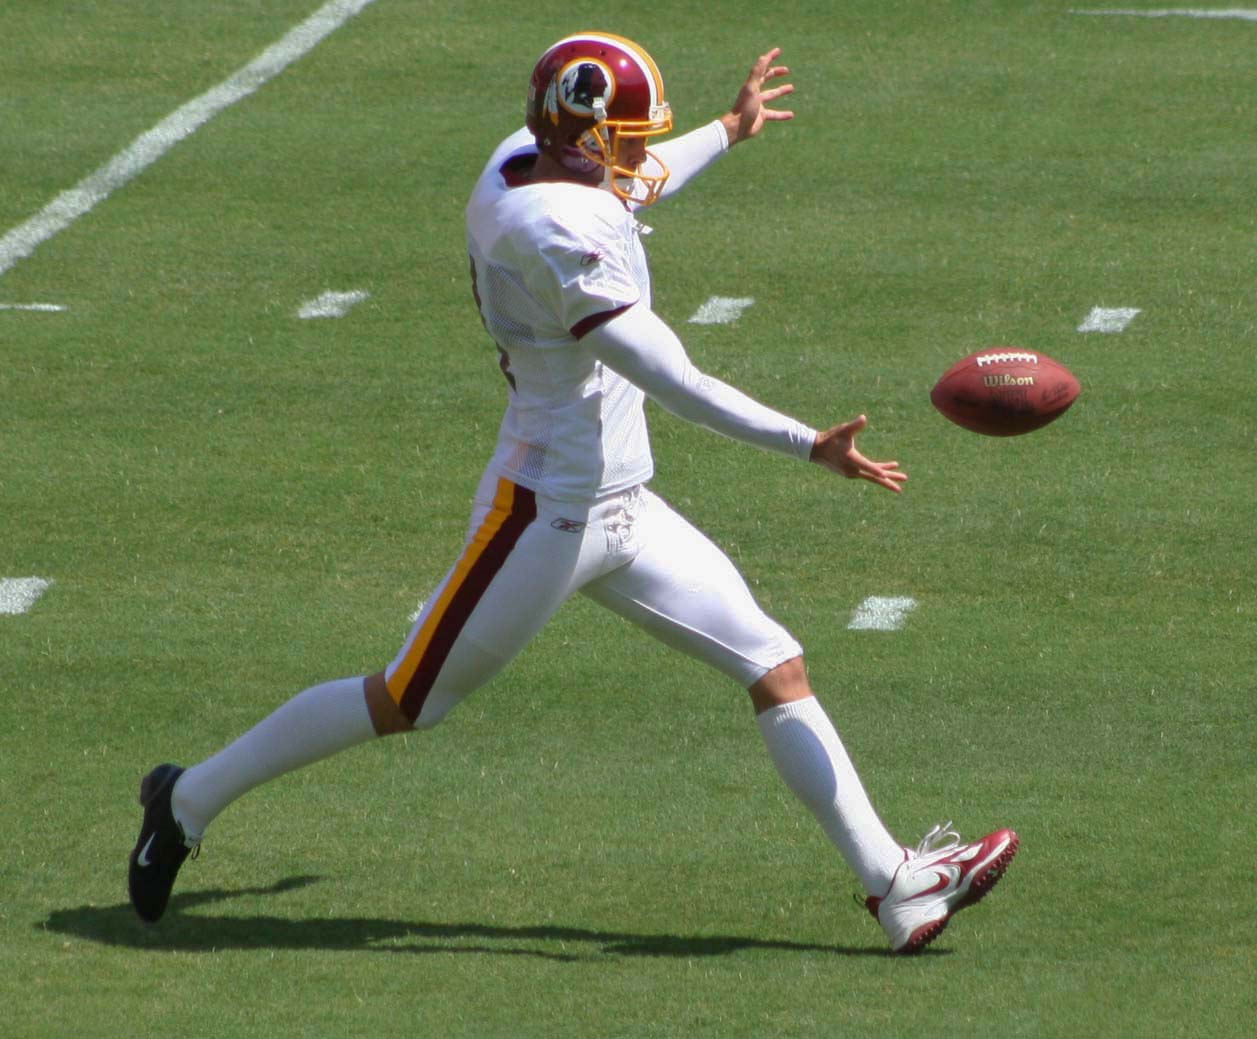 a man wearing a football uniform prepares to catch the ball